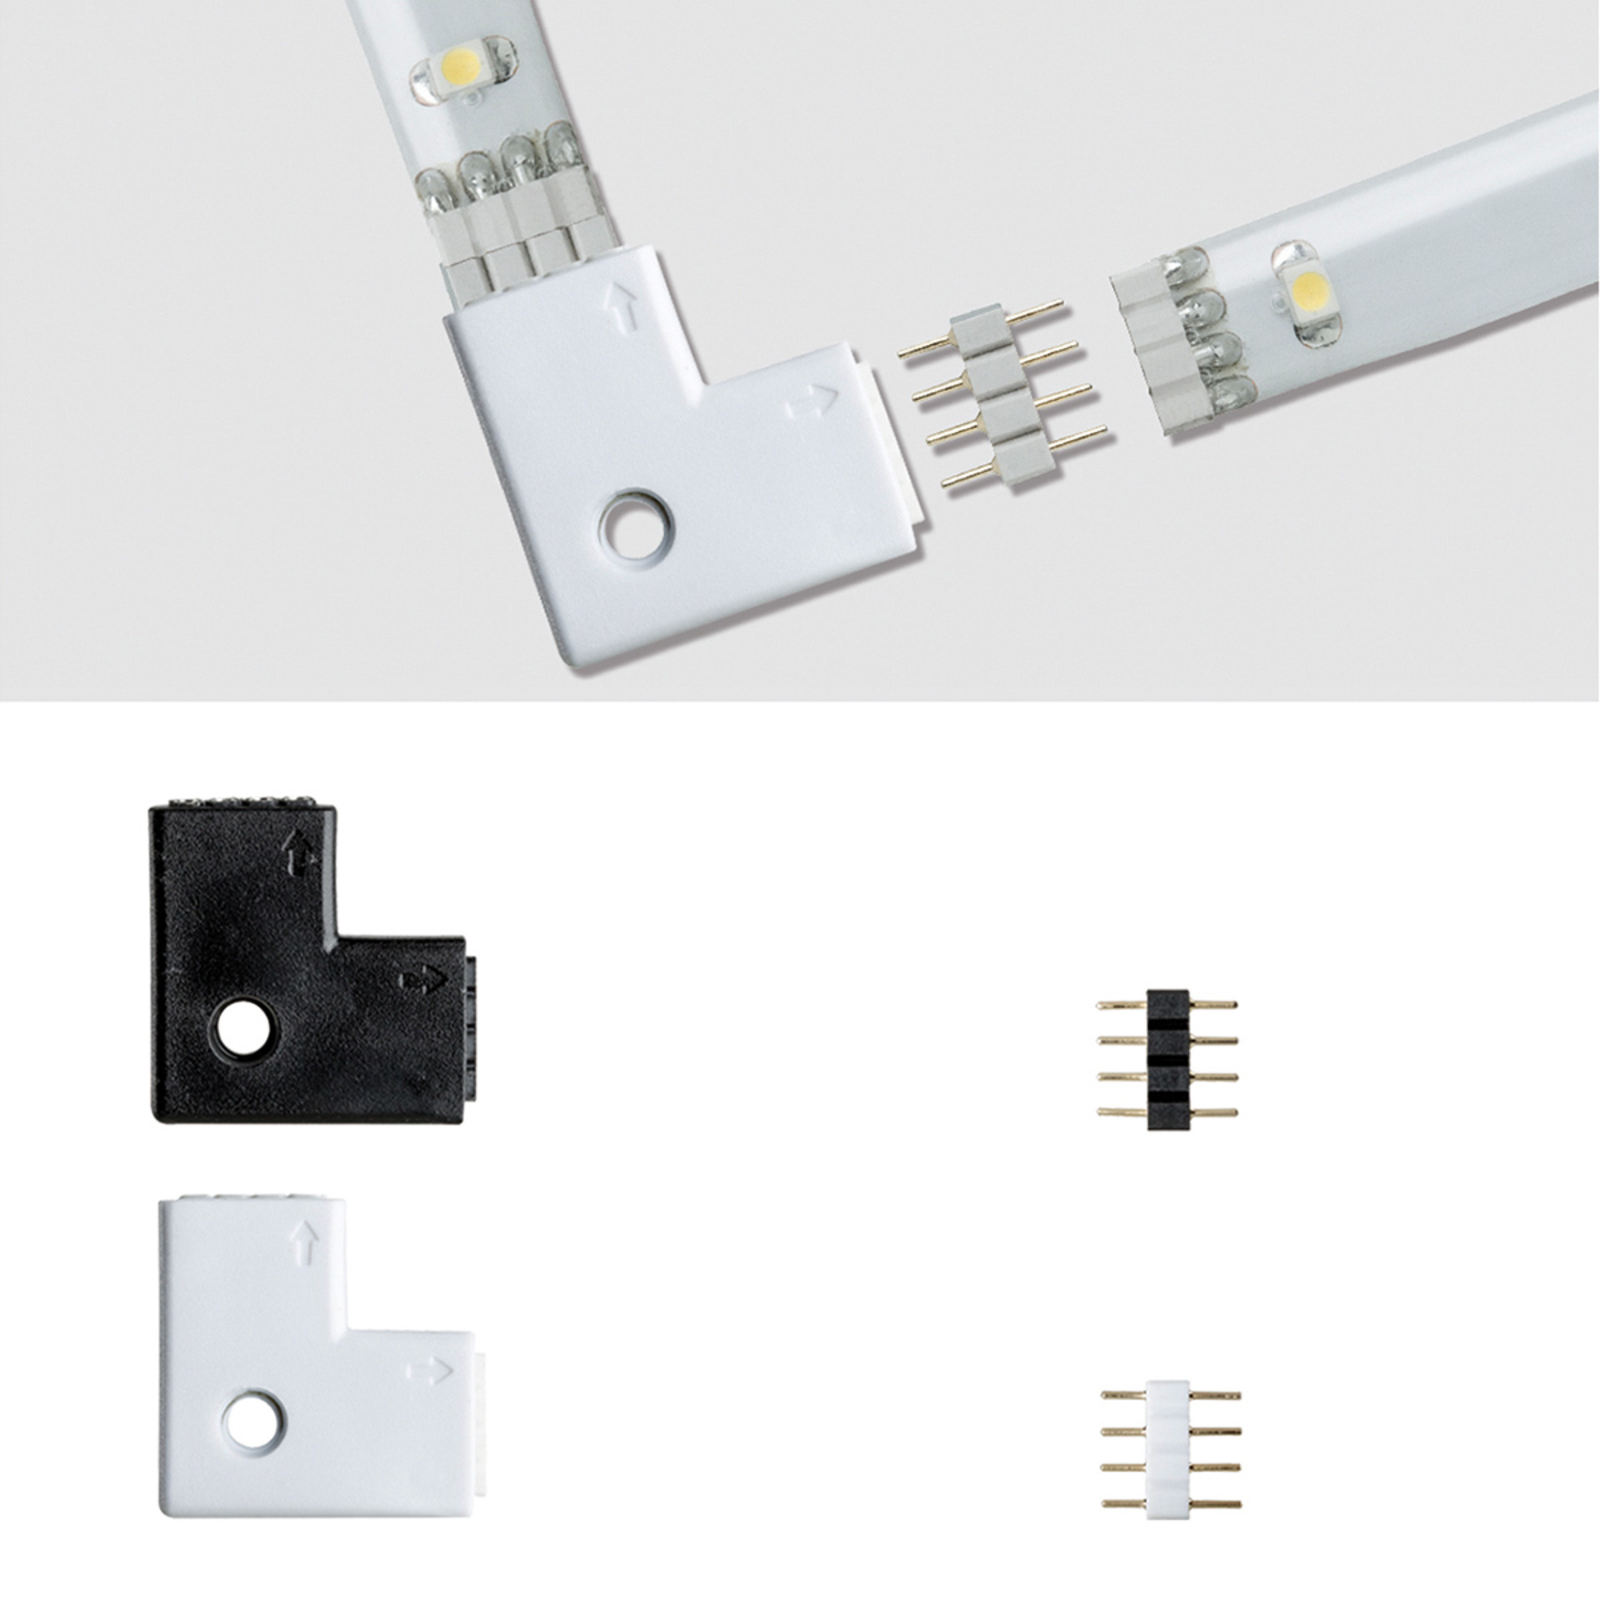 Set of 4 corner connectors for Caja strip system